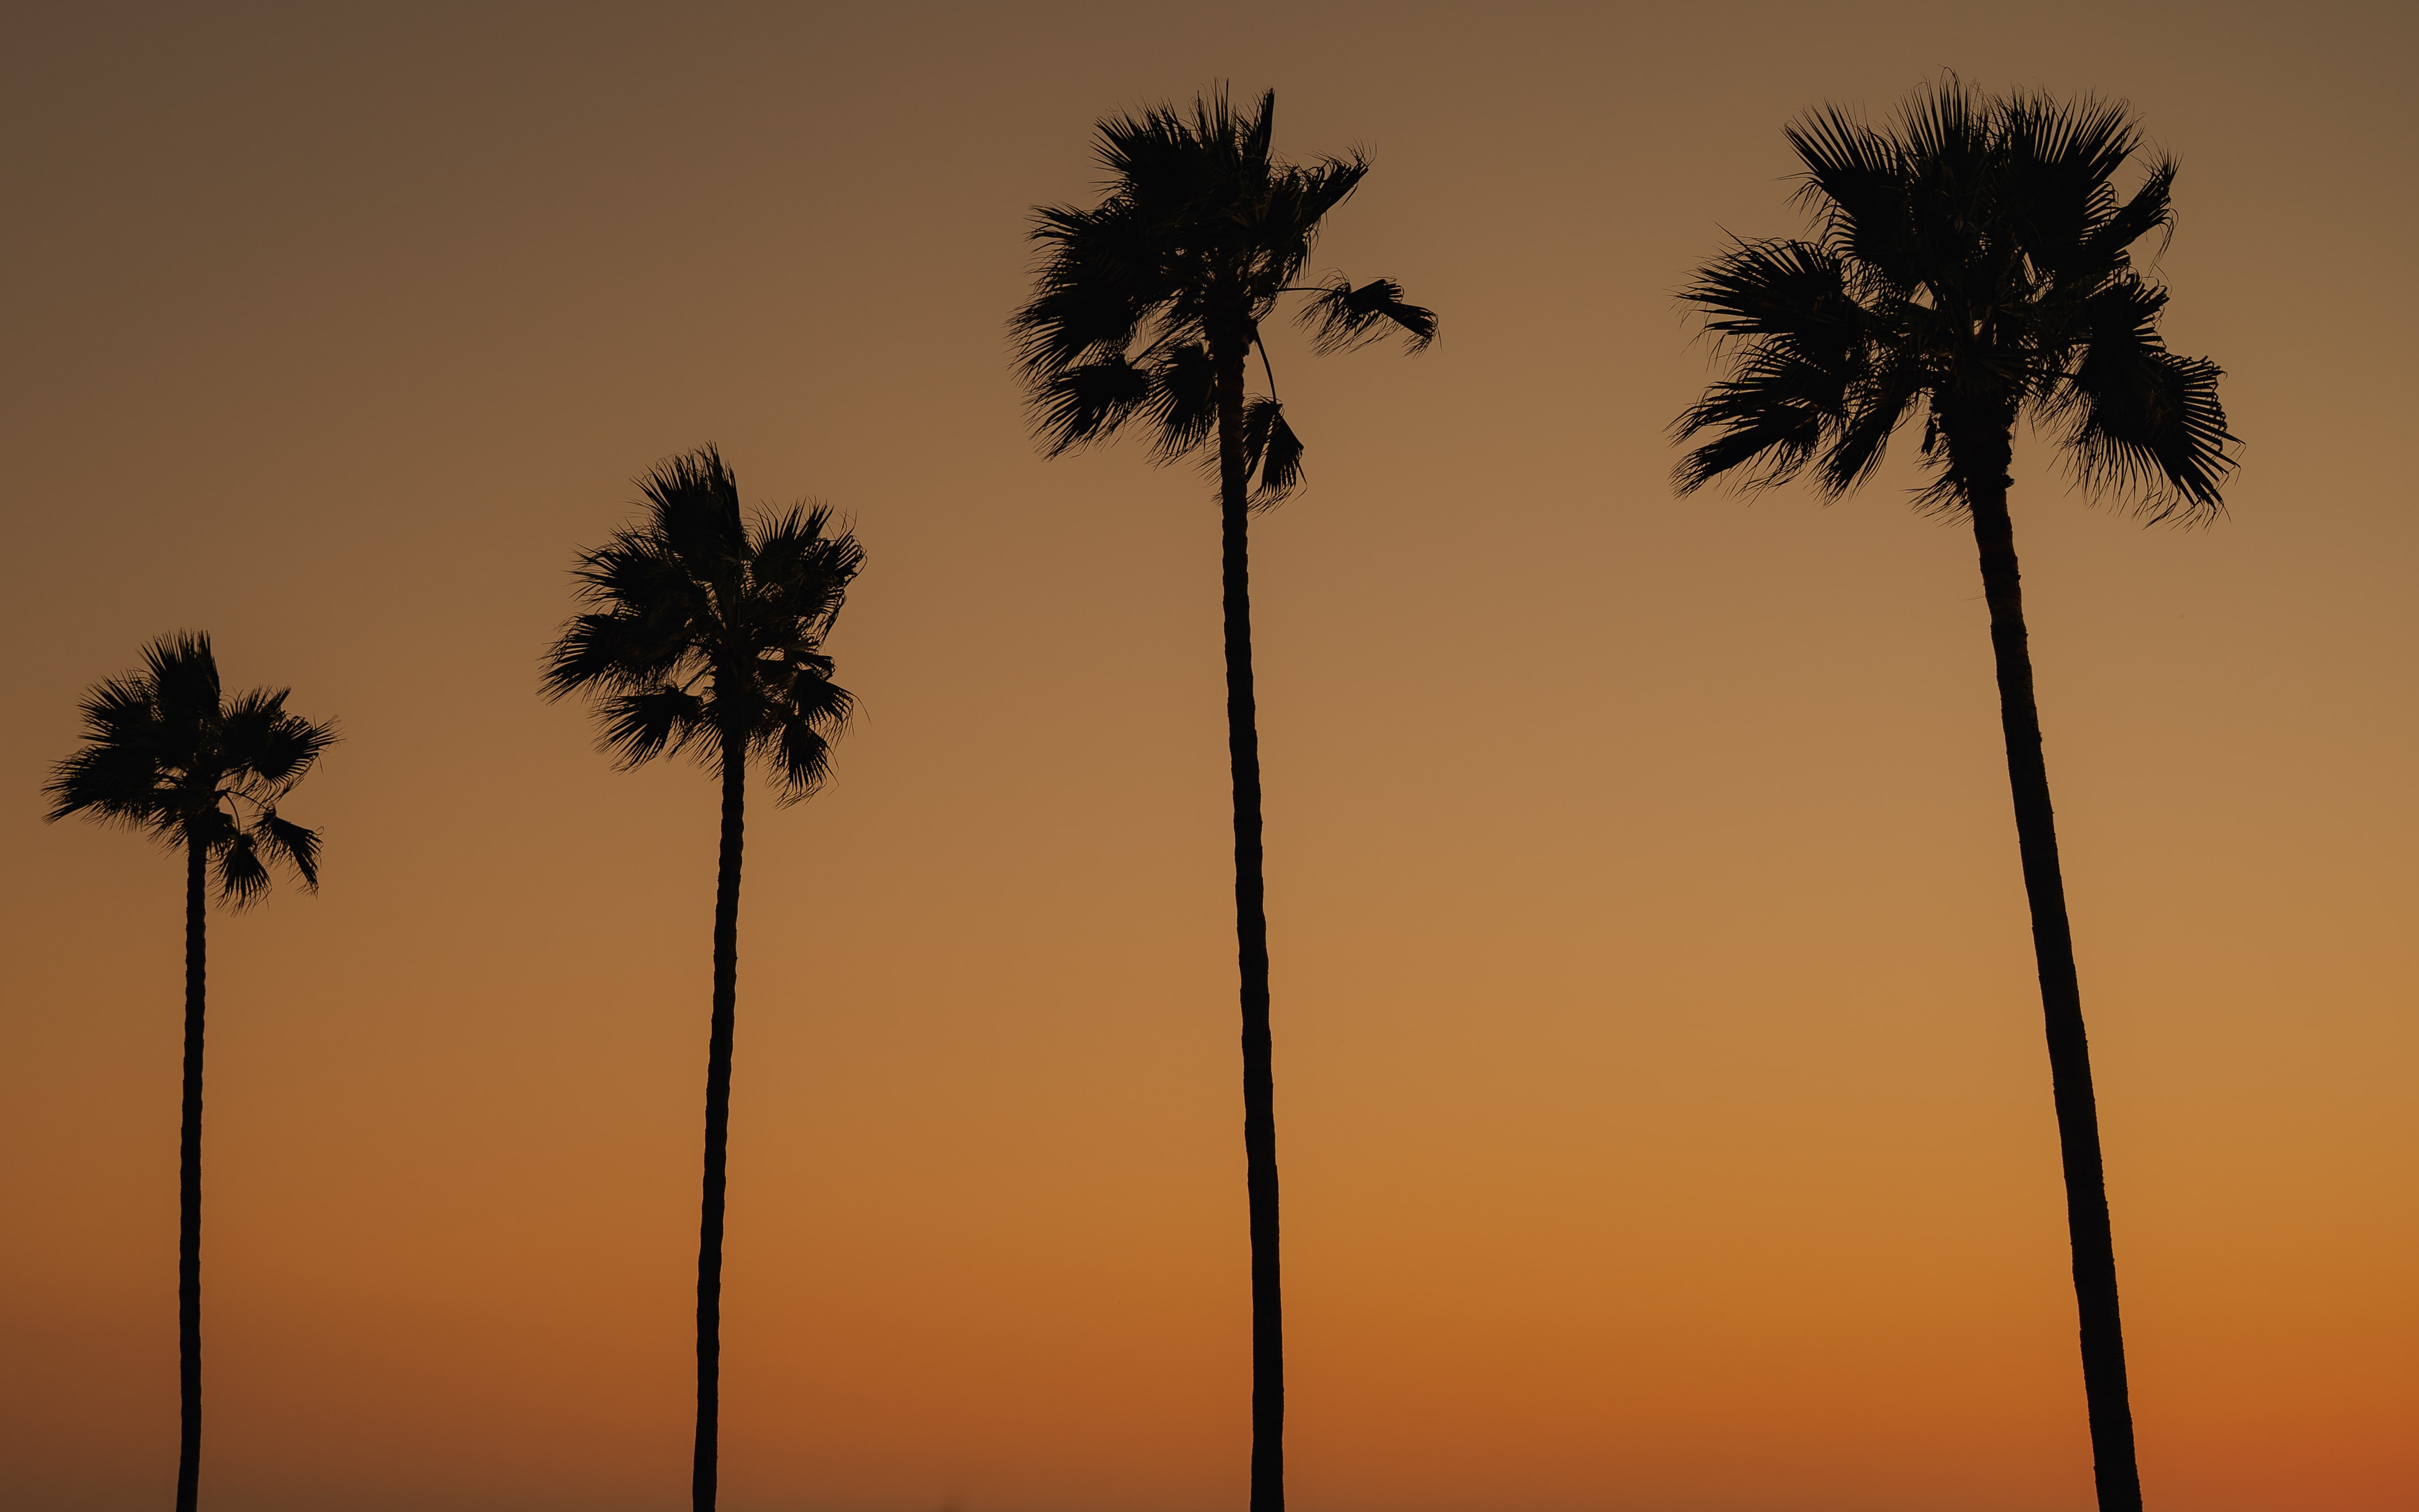 desktop Images twilight, nature, trees, palms, silhouettes, dusk